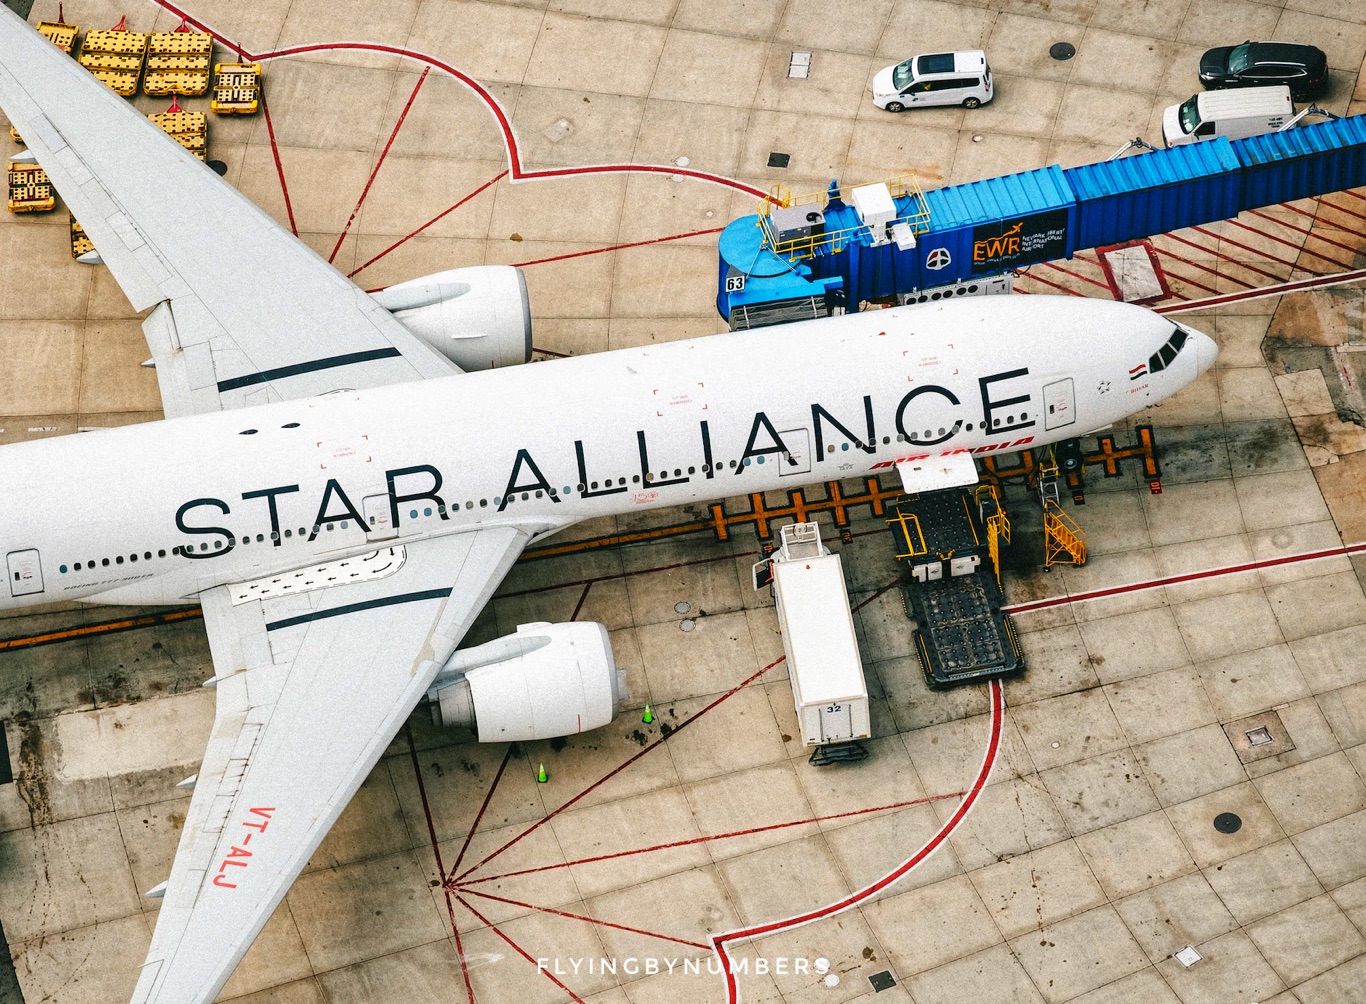 Star alliance Boeing 777-300ER at the gate